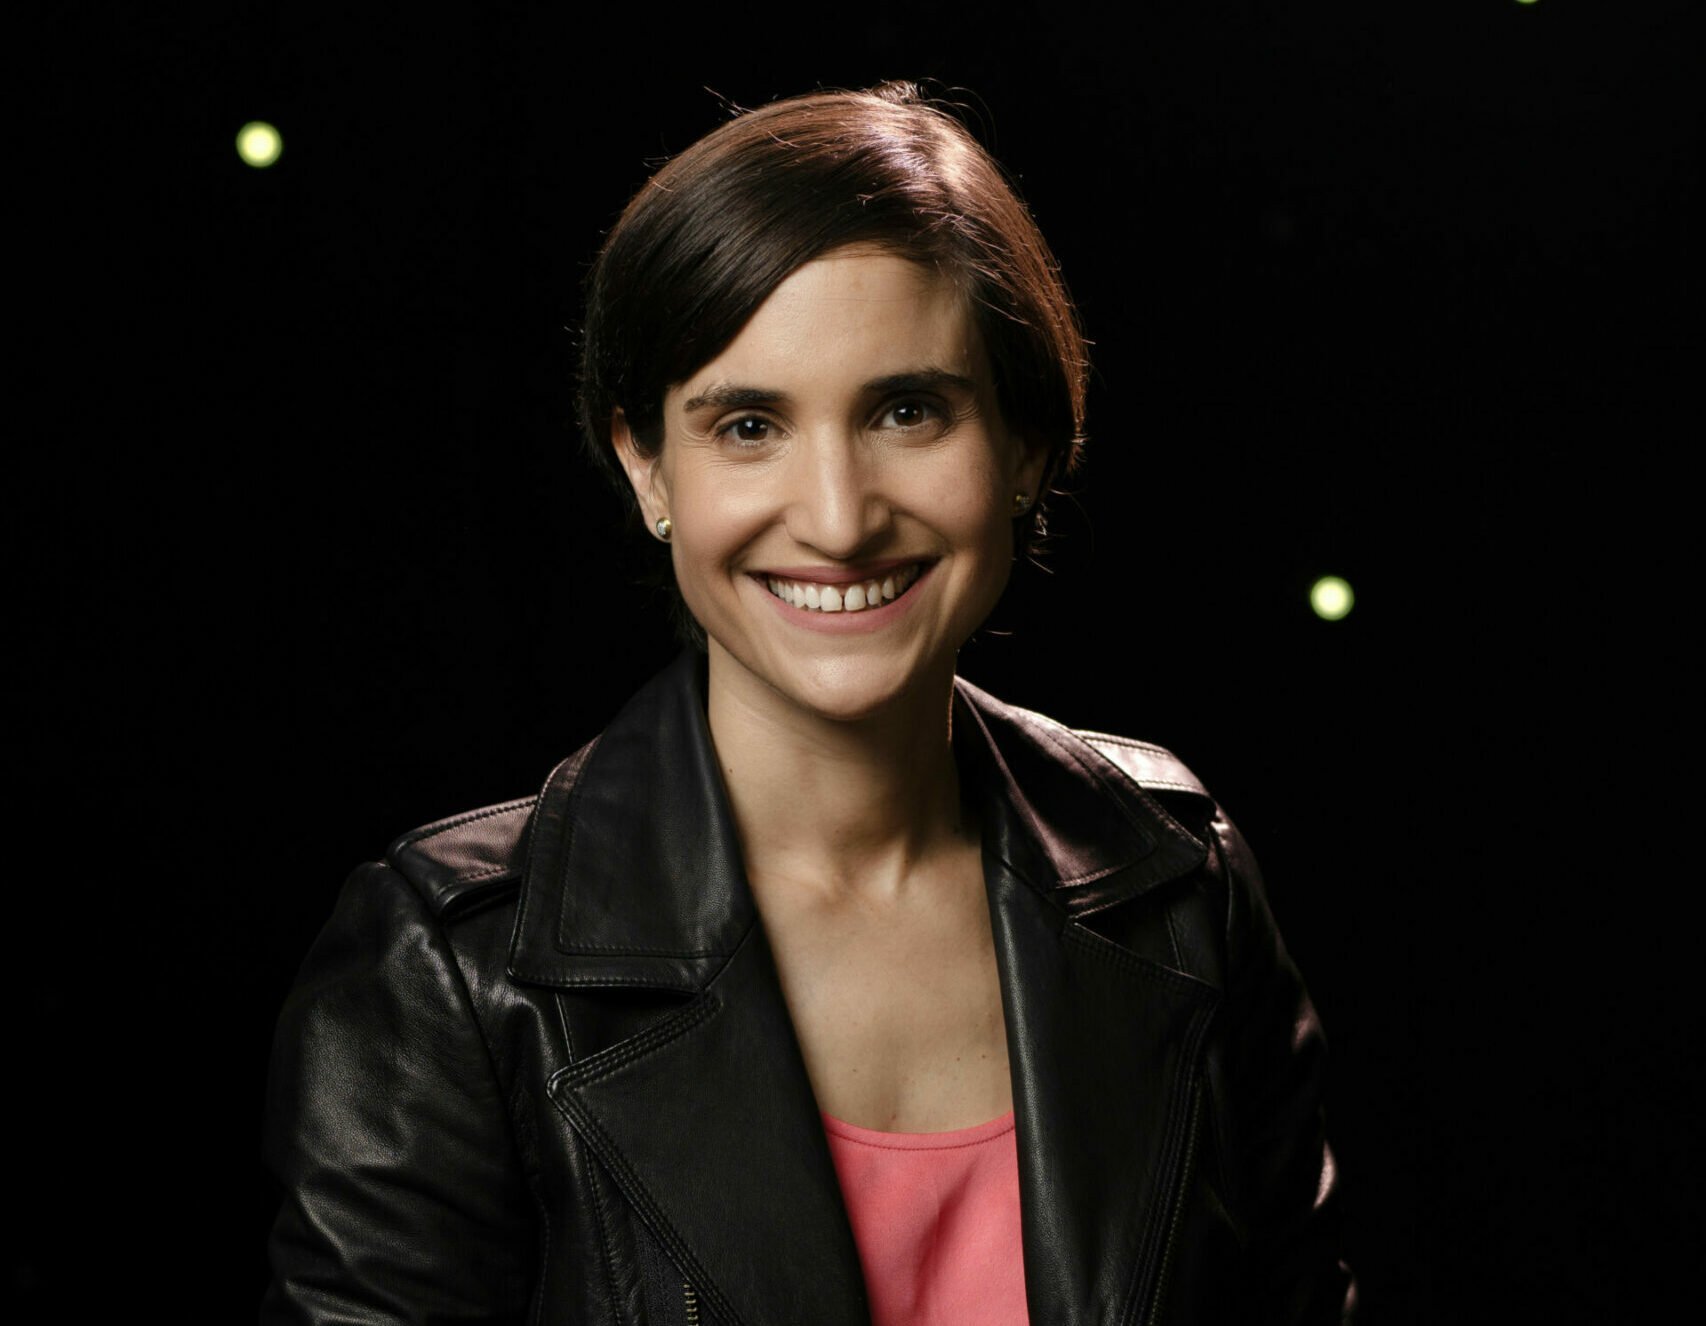 Juliette Feld Grossman, the new CEO of Feld Entertainment. Photo courtesy Feld Entertainment.